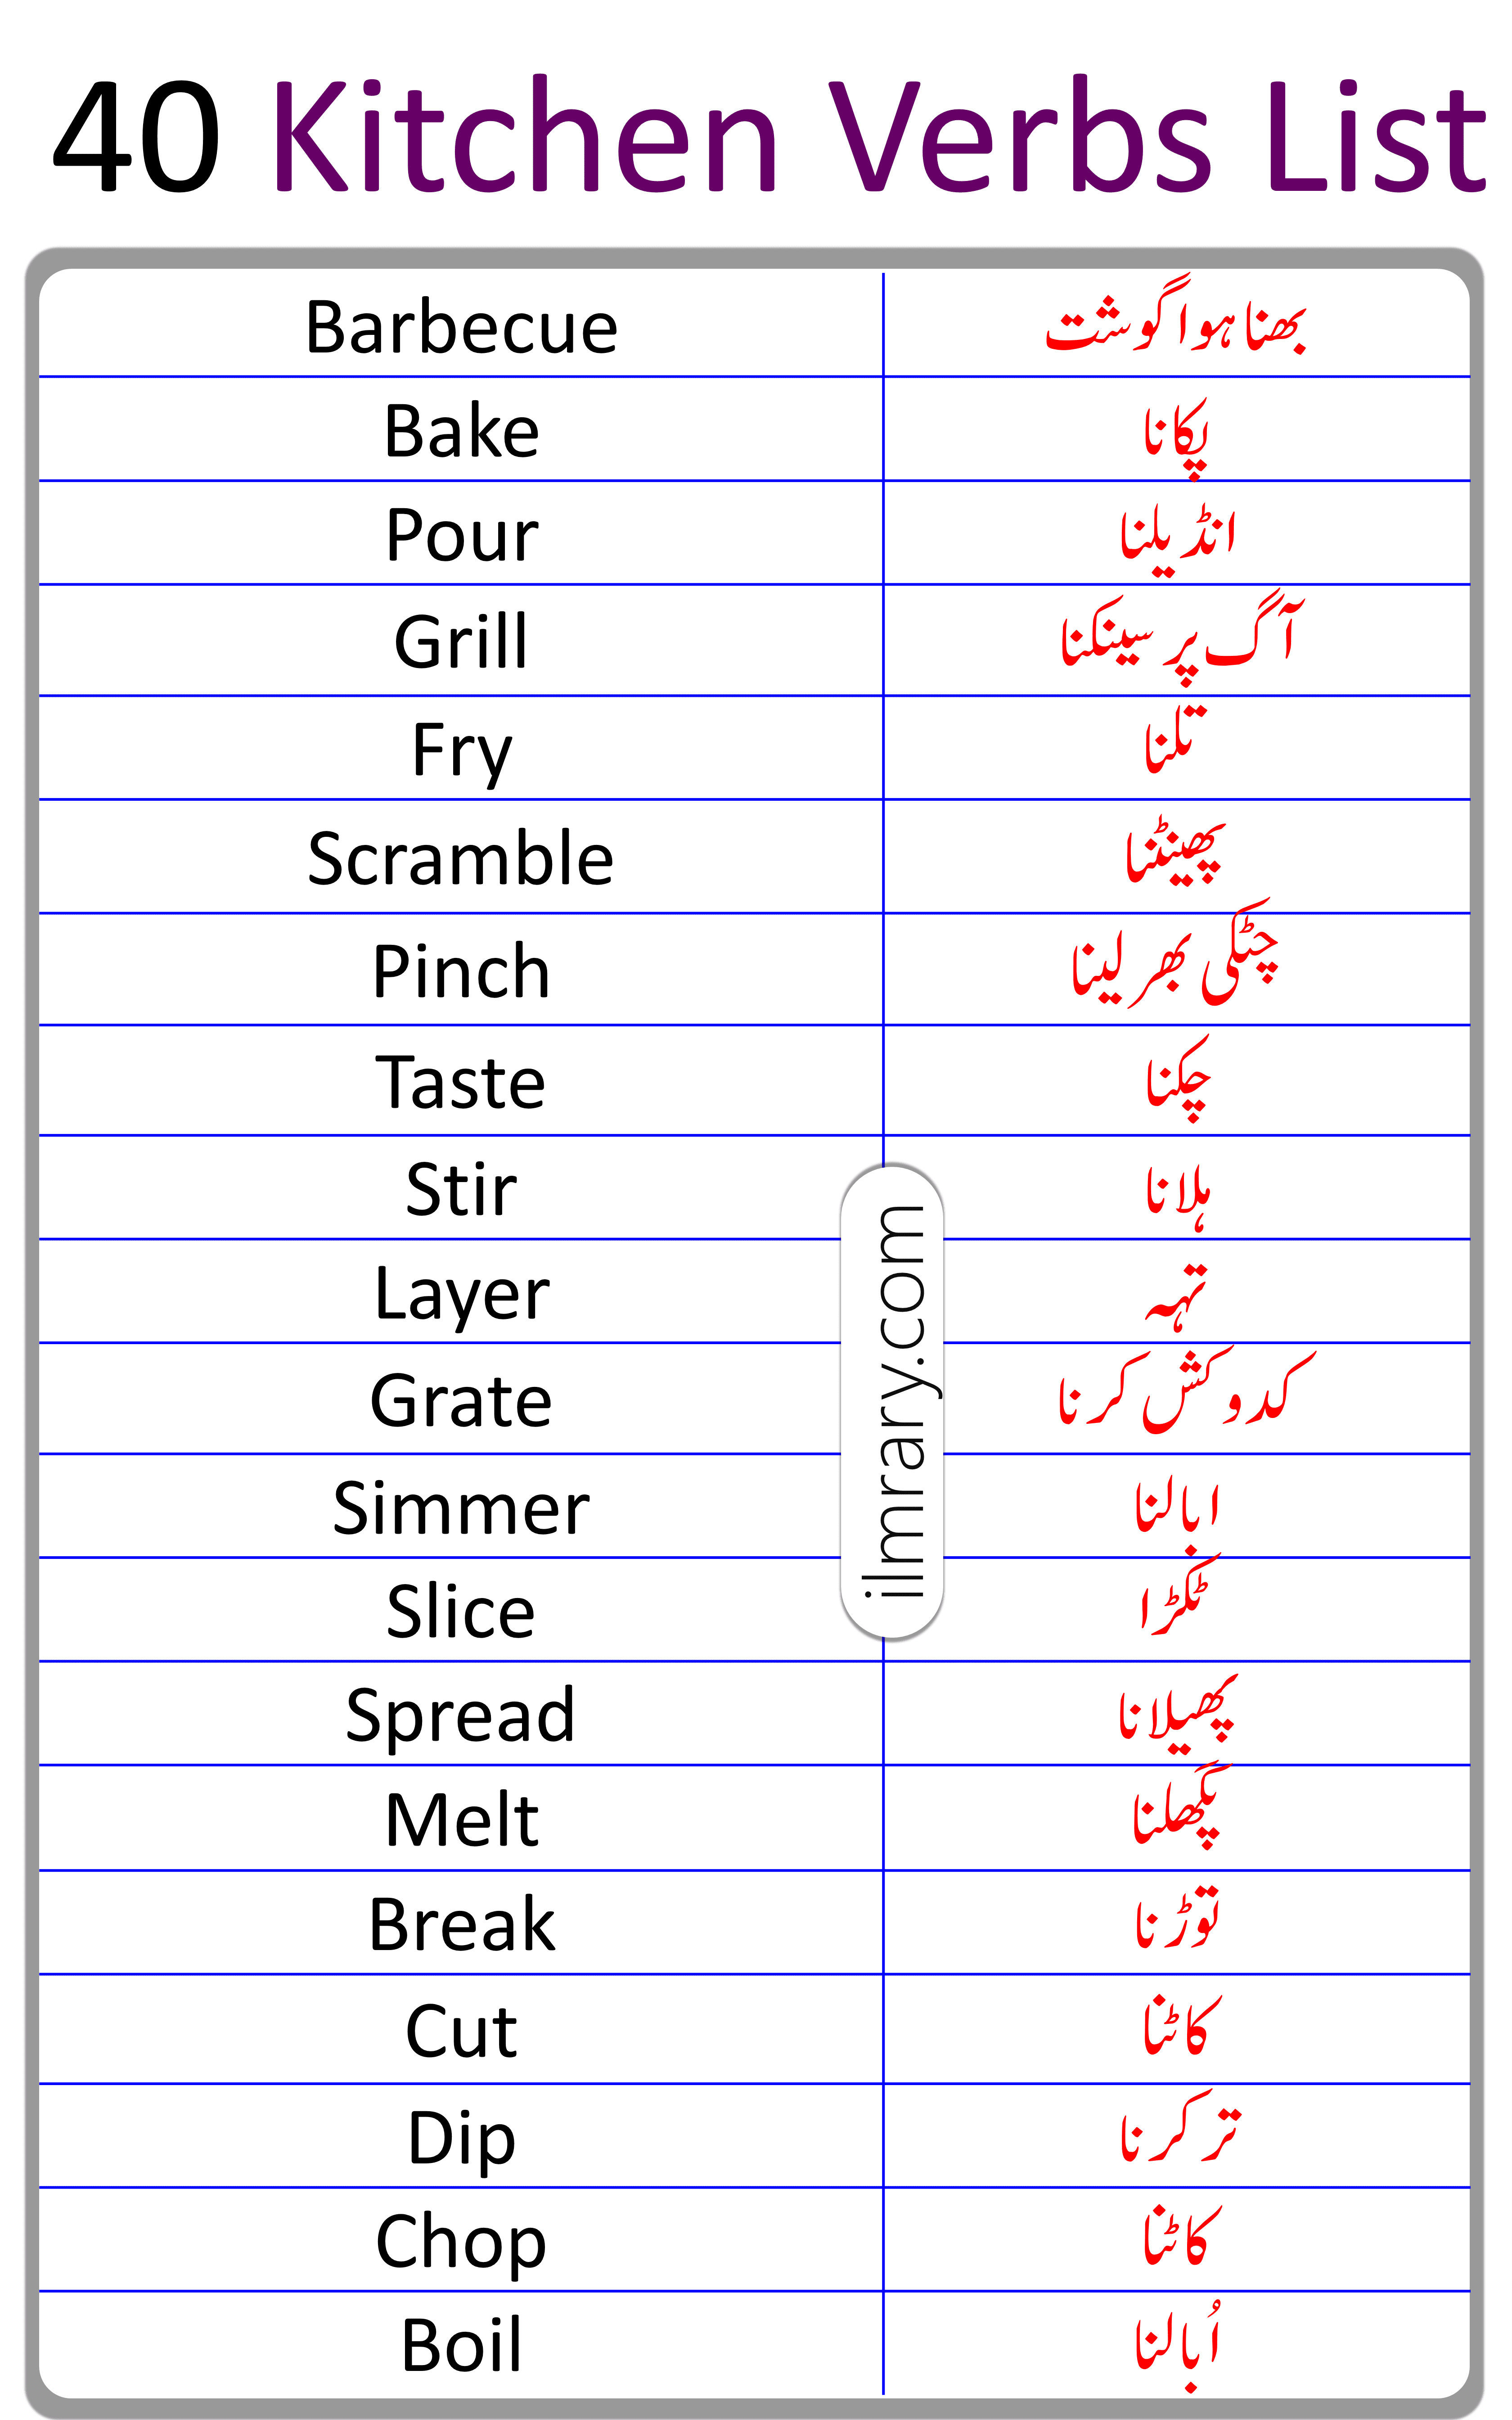 List of Kitchen Verbs in English with Urdu Translation